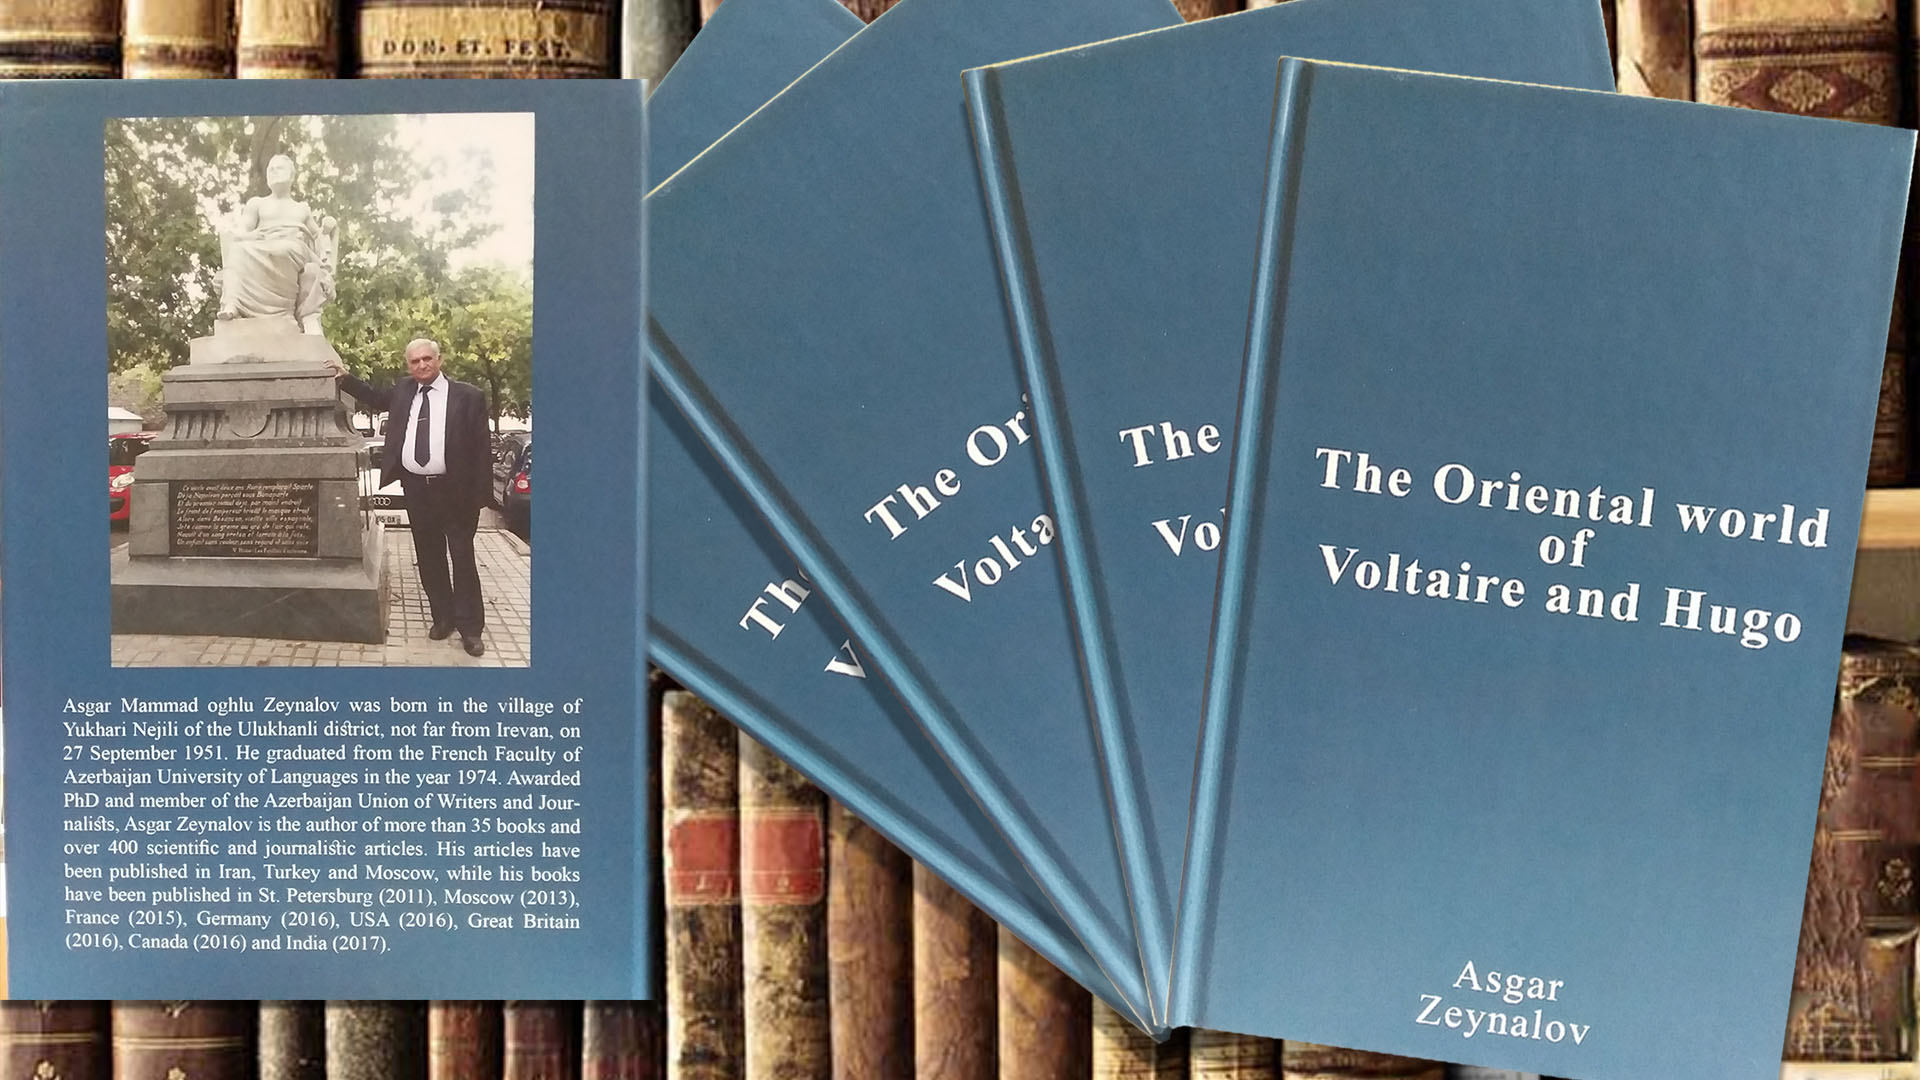 Professor Asker Zeynalov’s "Oriental World of Voltaire and Hugo" has been Published in Sweden